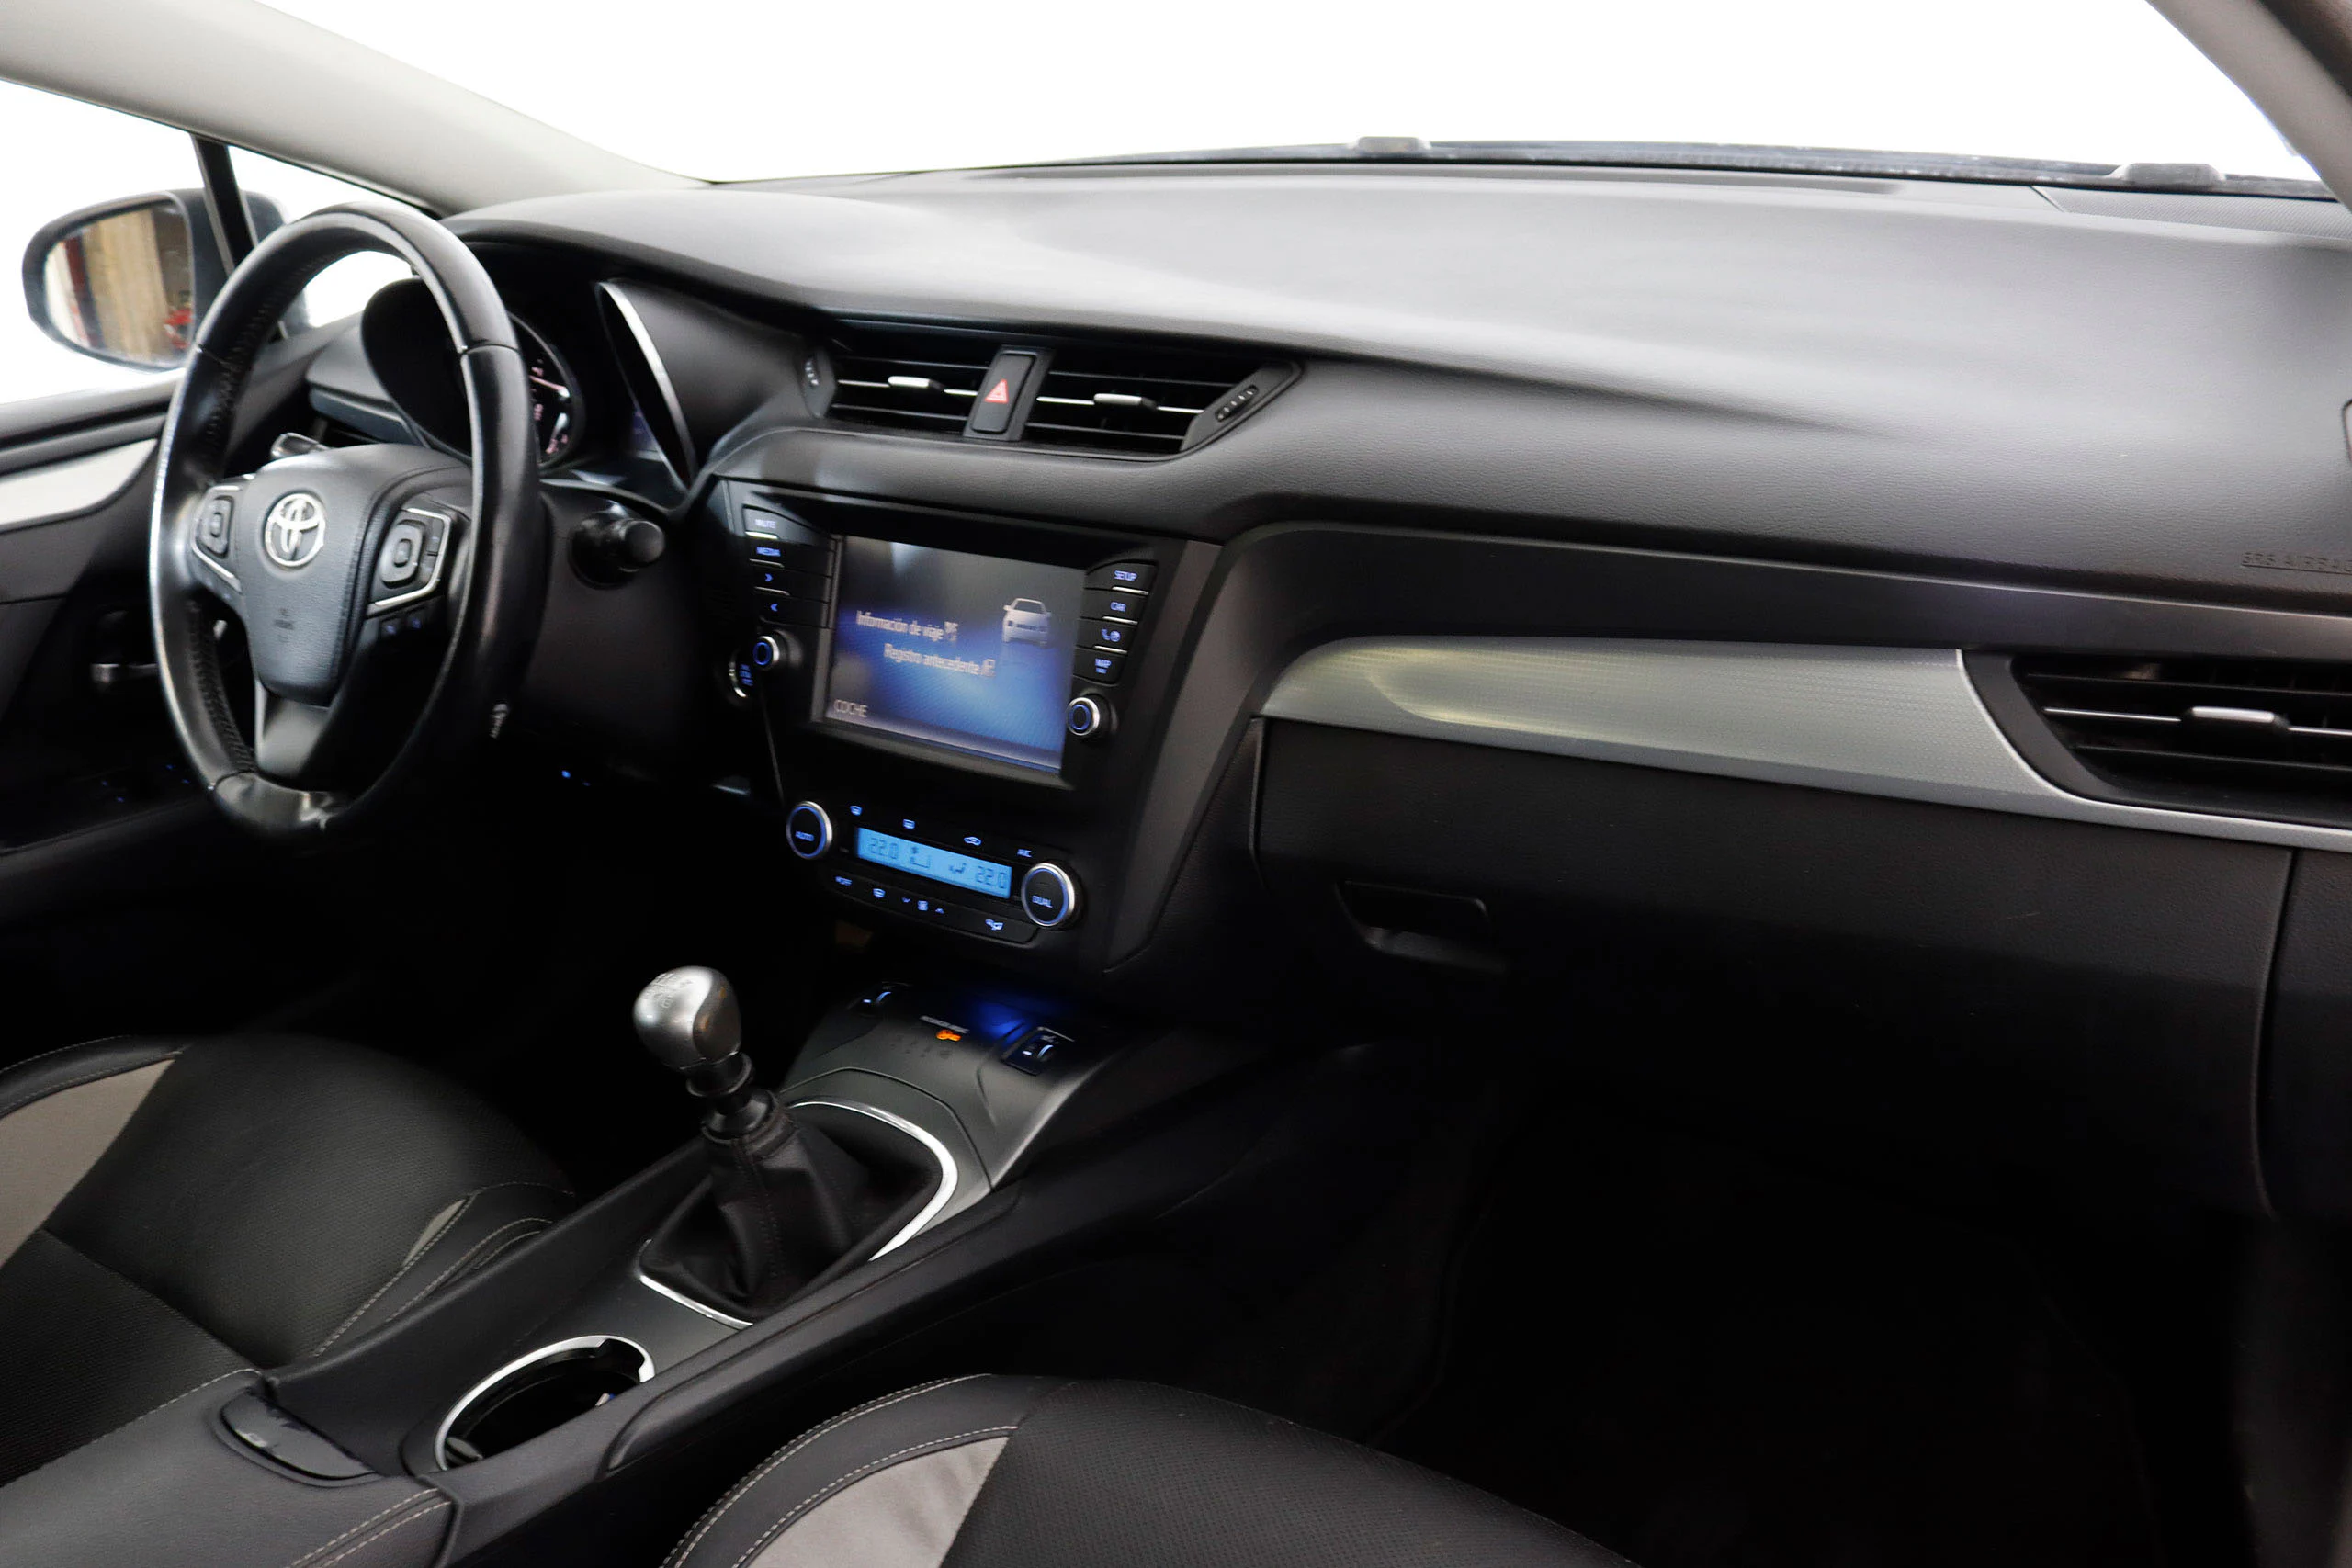 Toyota Avensis 2.0 TOURING SPORTS D4-D Dynamic 143cv 5P S/S # FAROS LED, TECHO PANORAMICO - Foto 19